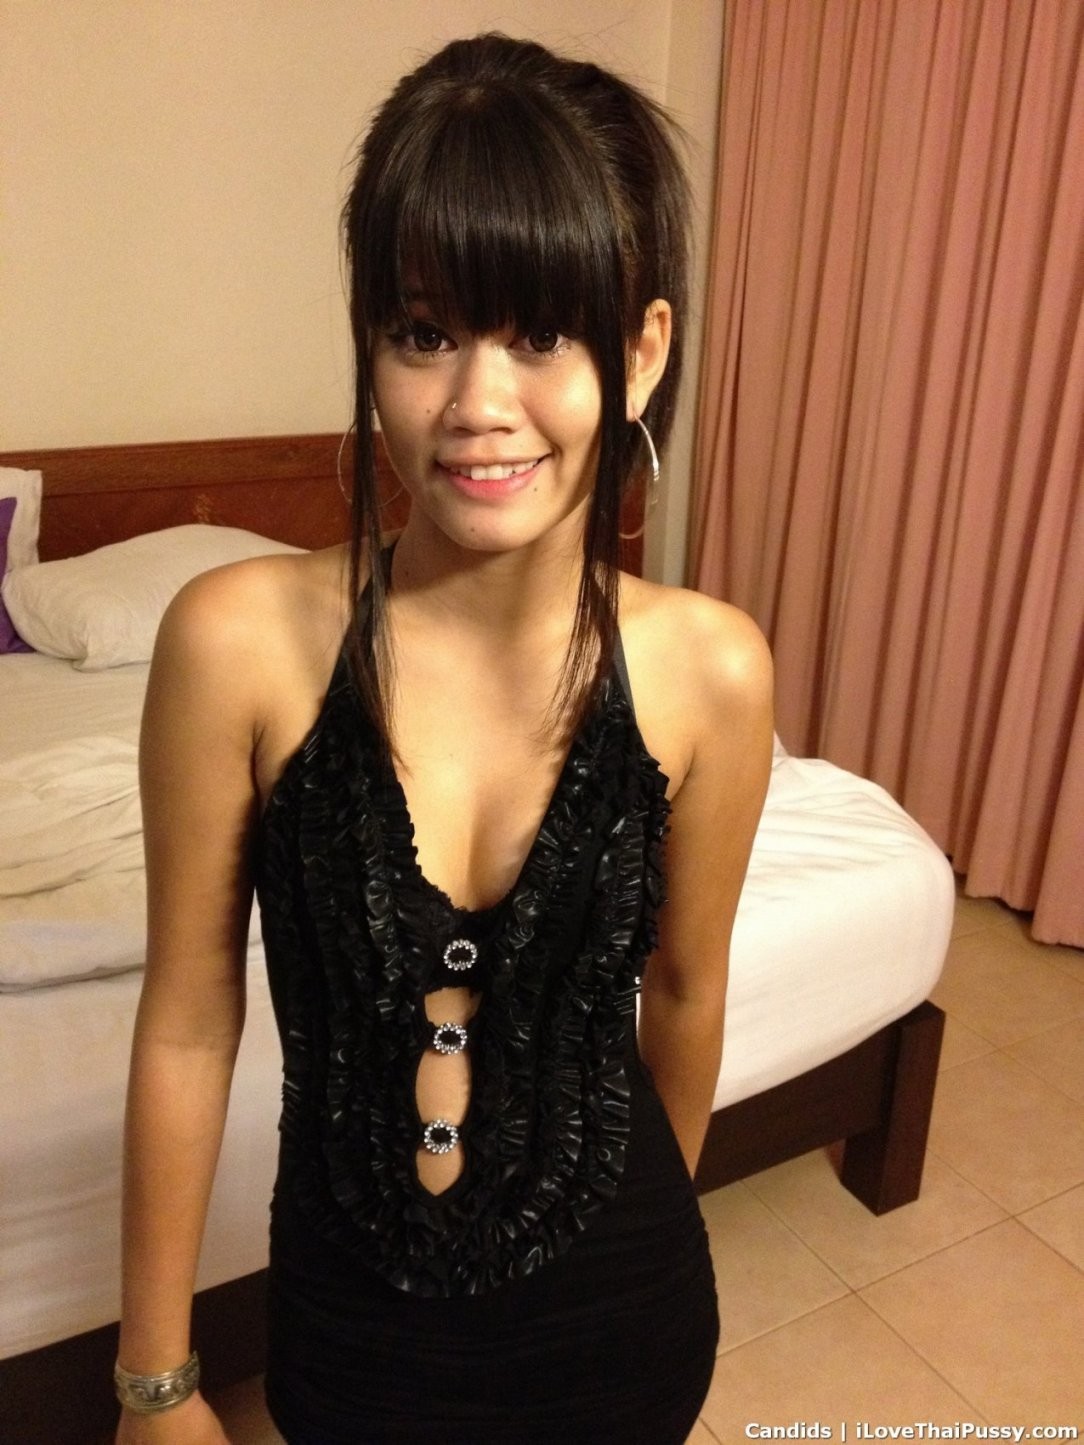 Hot Thai street hooker tricked no condom bareback by sex tourist asian slut #67951828